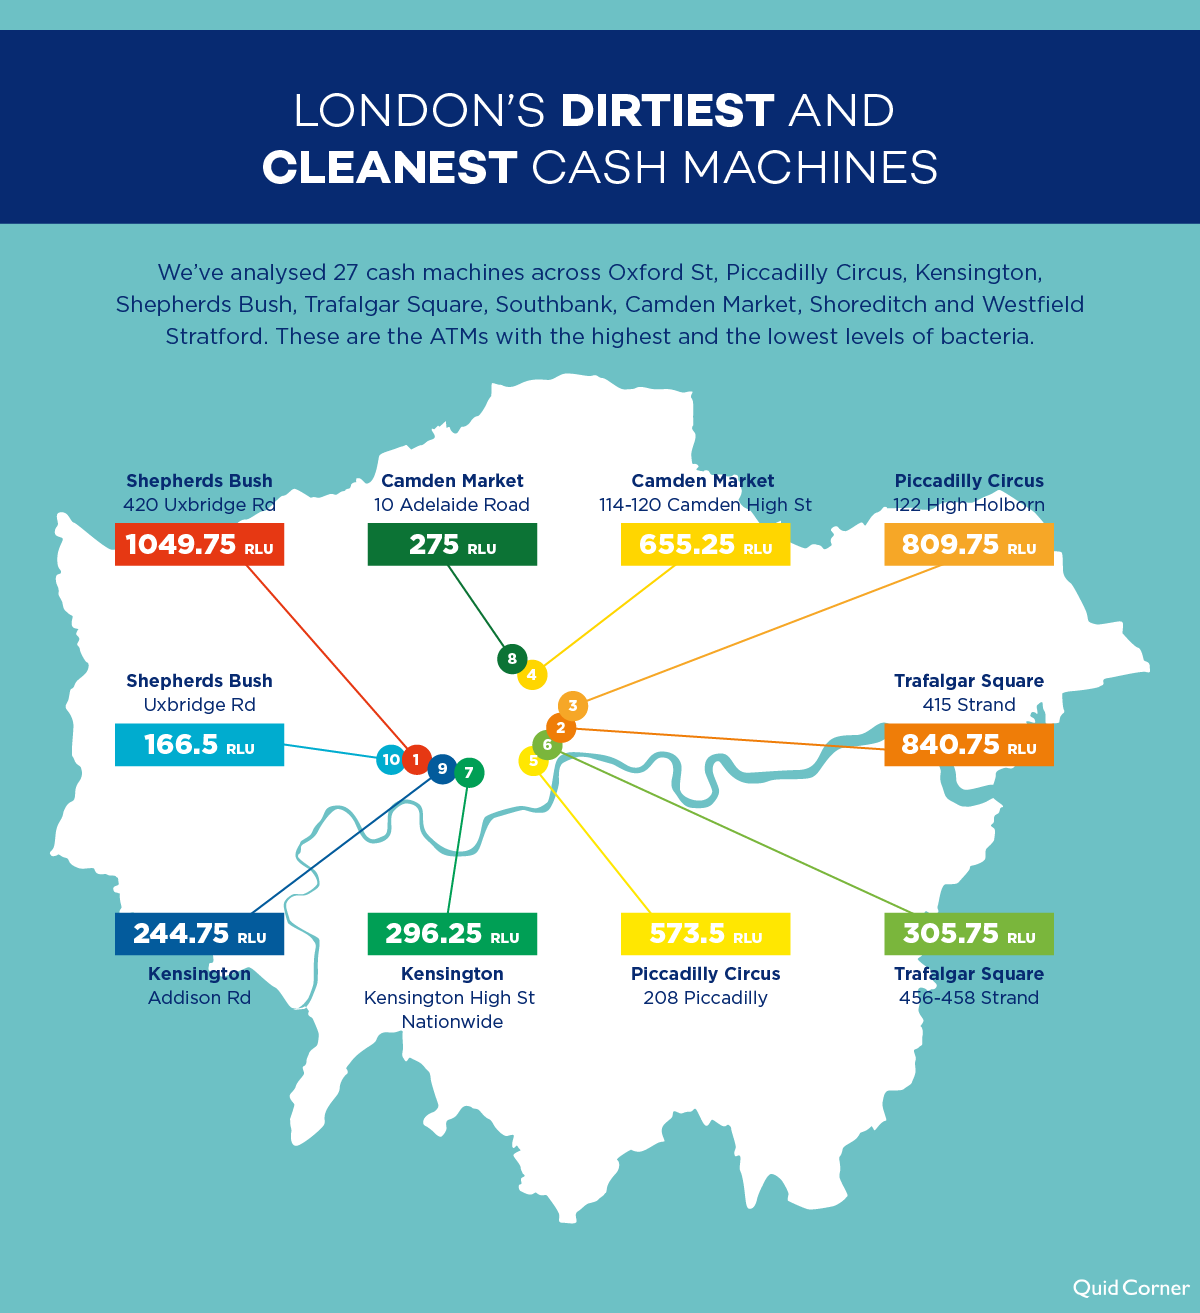 London's dirtiest machines